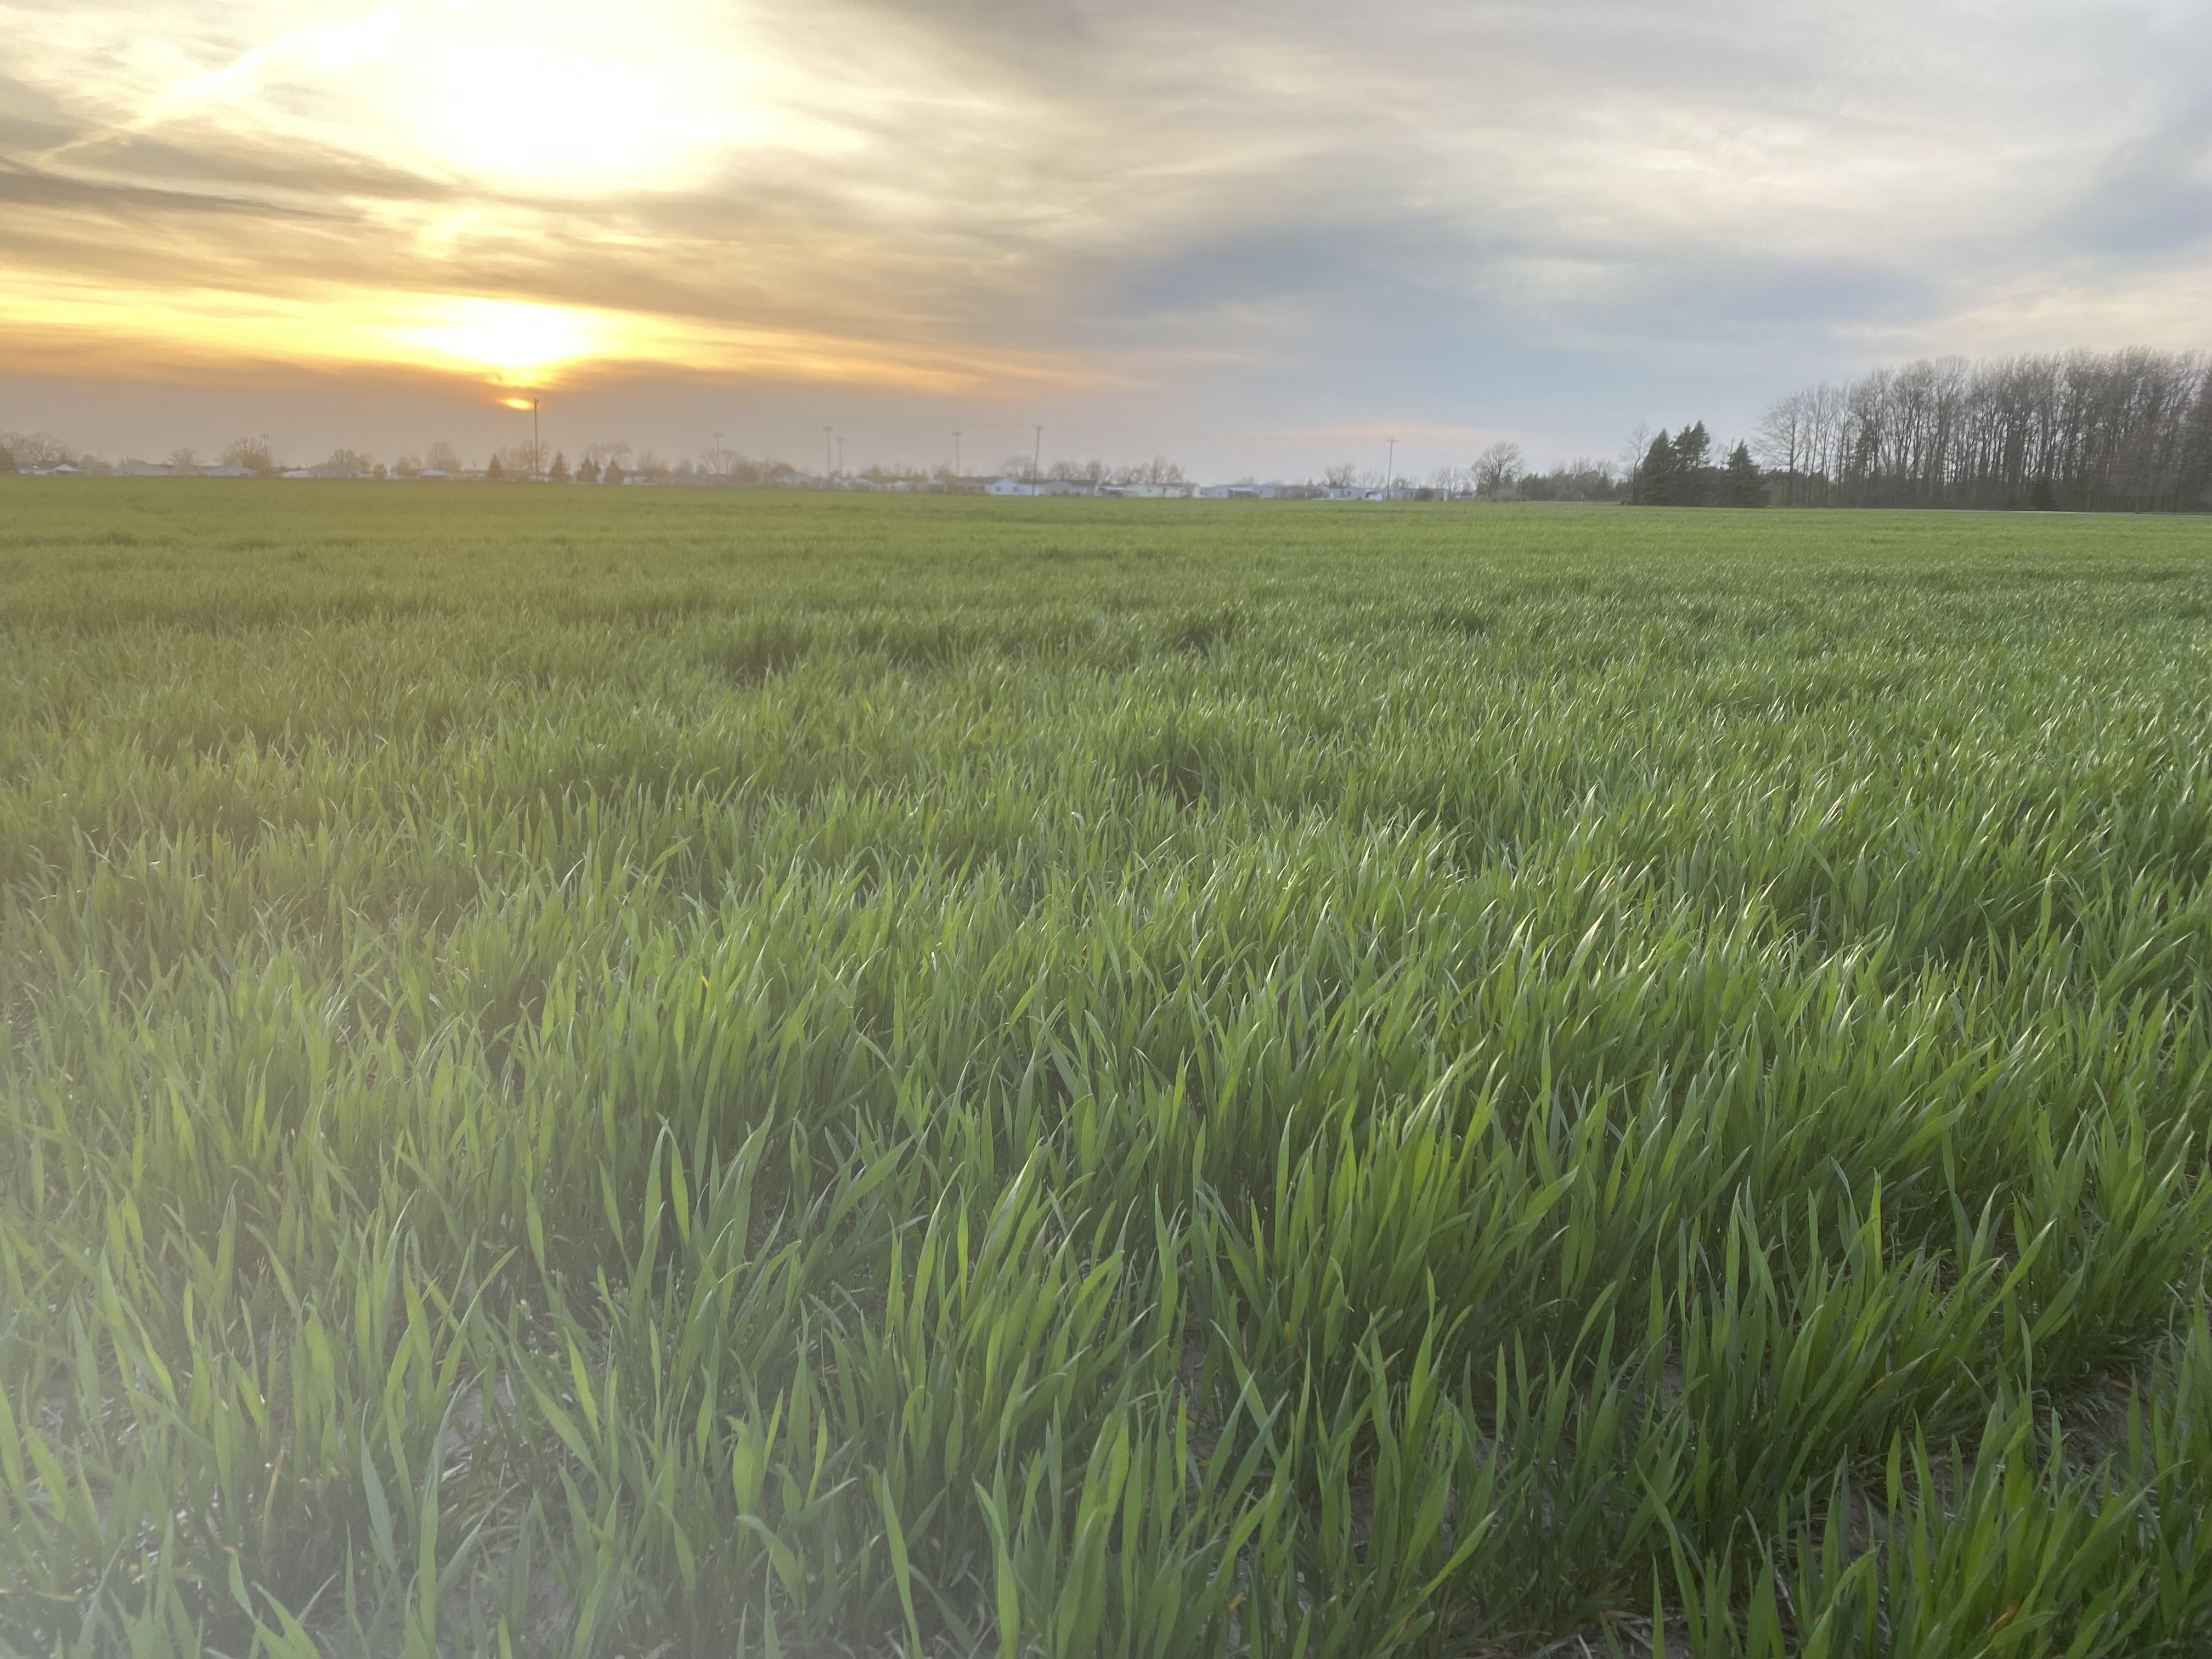 Sun setting on a wheat field.